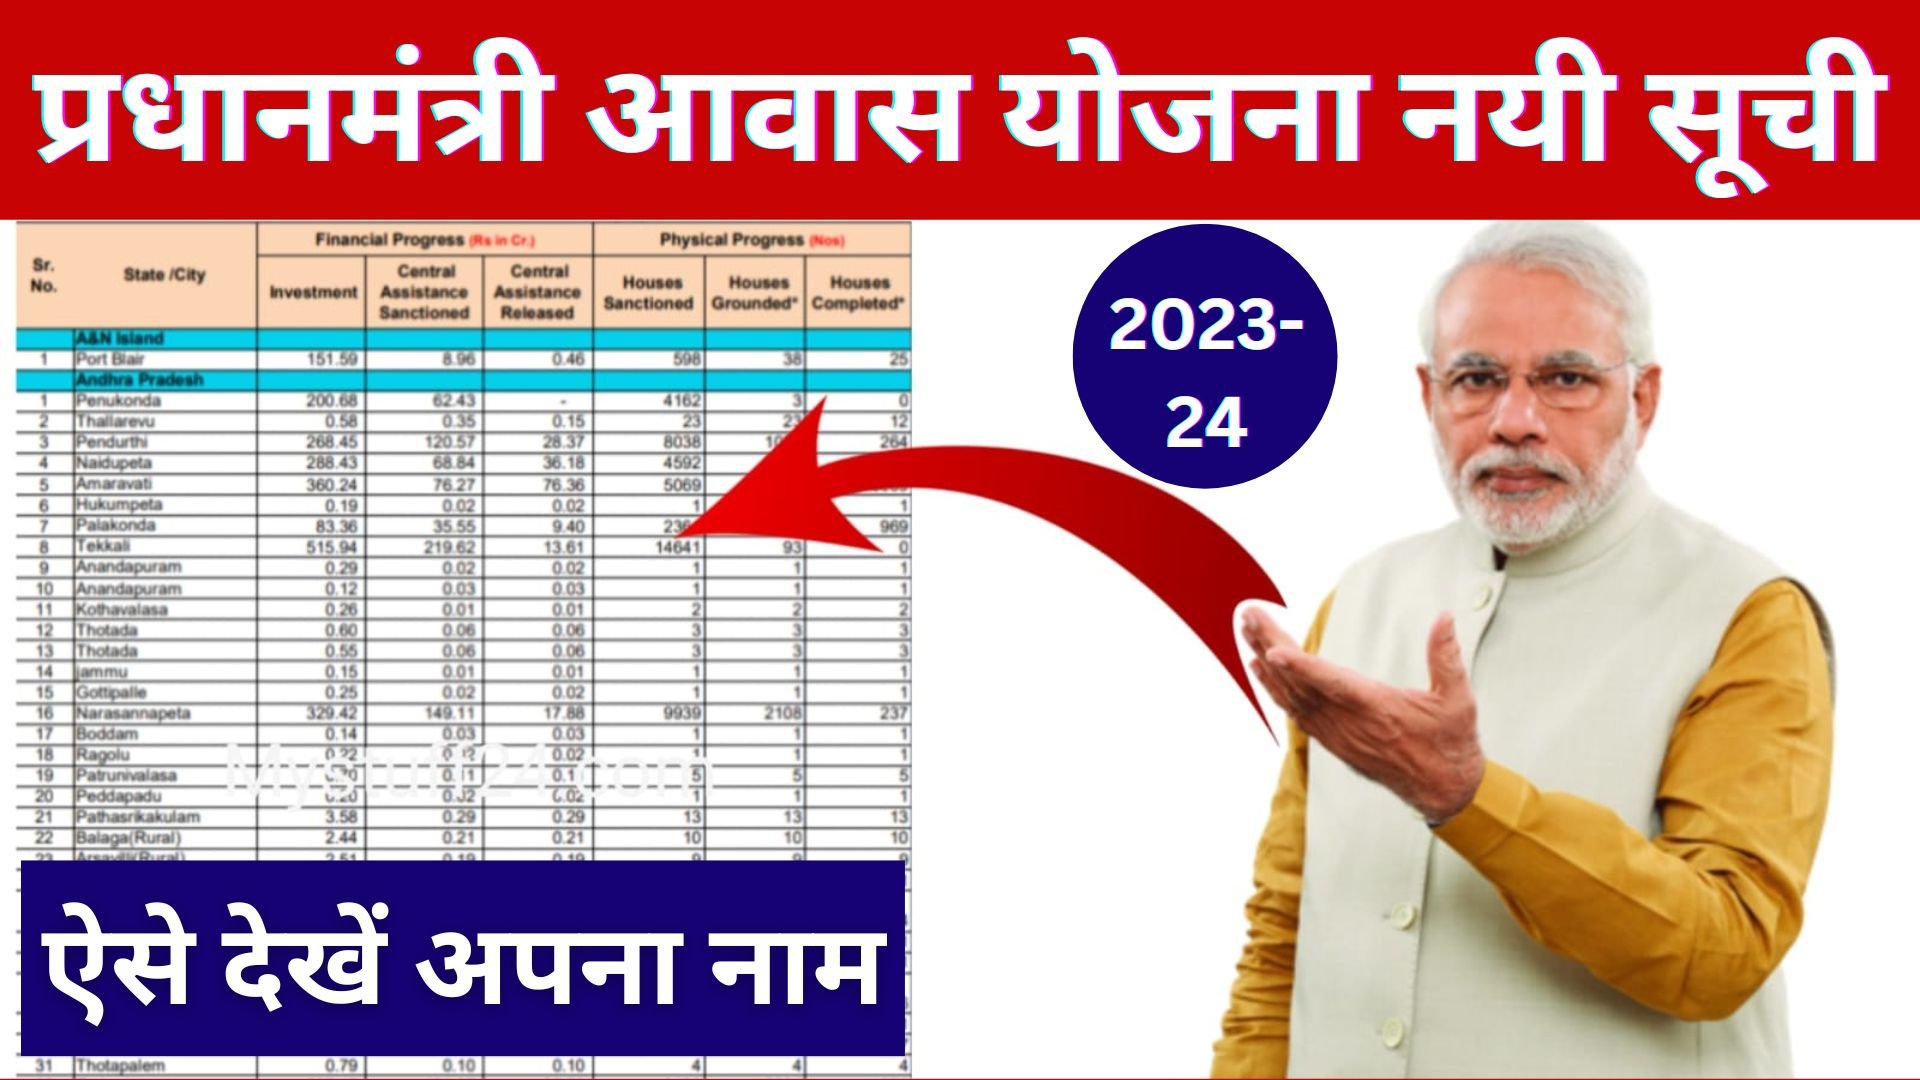 Pradhan Mantri Awas Yojana Suchi 2023-24: प्रधानमंत्री आवास योजना नयी सूची में देखे अपना नाम